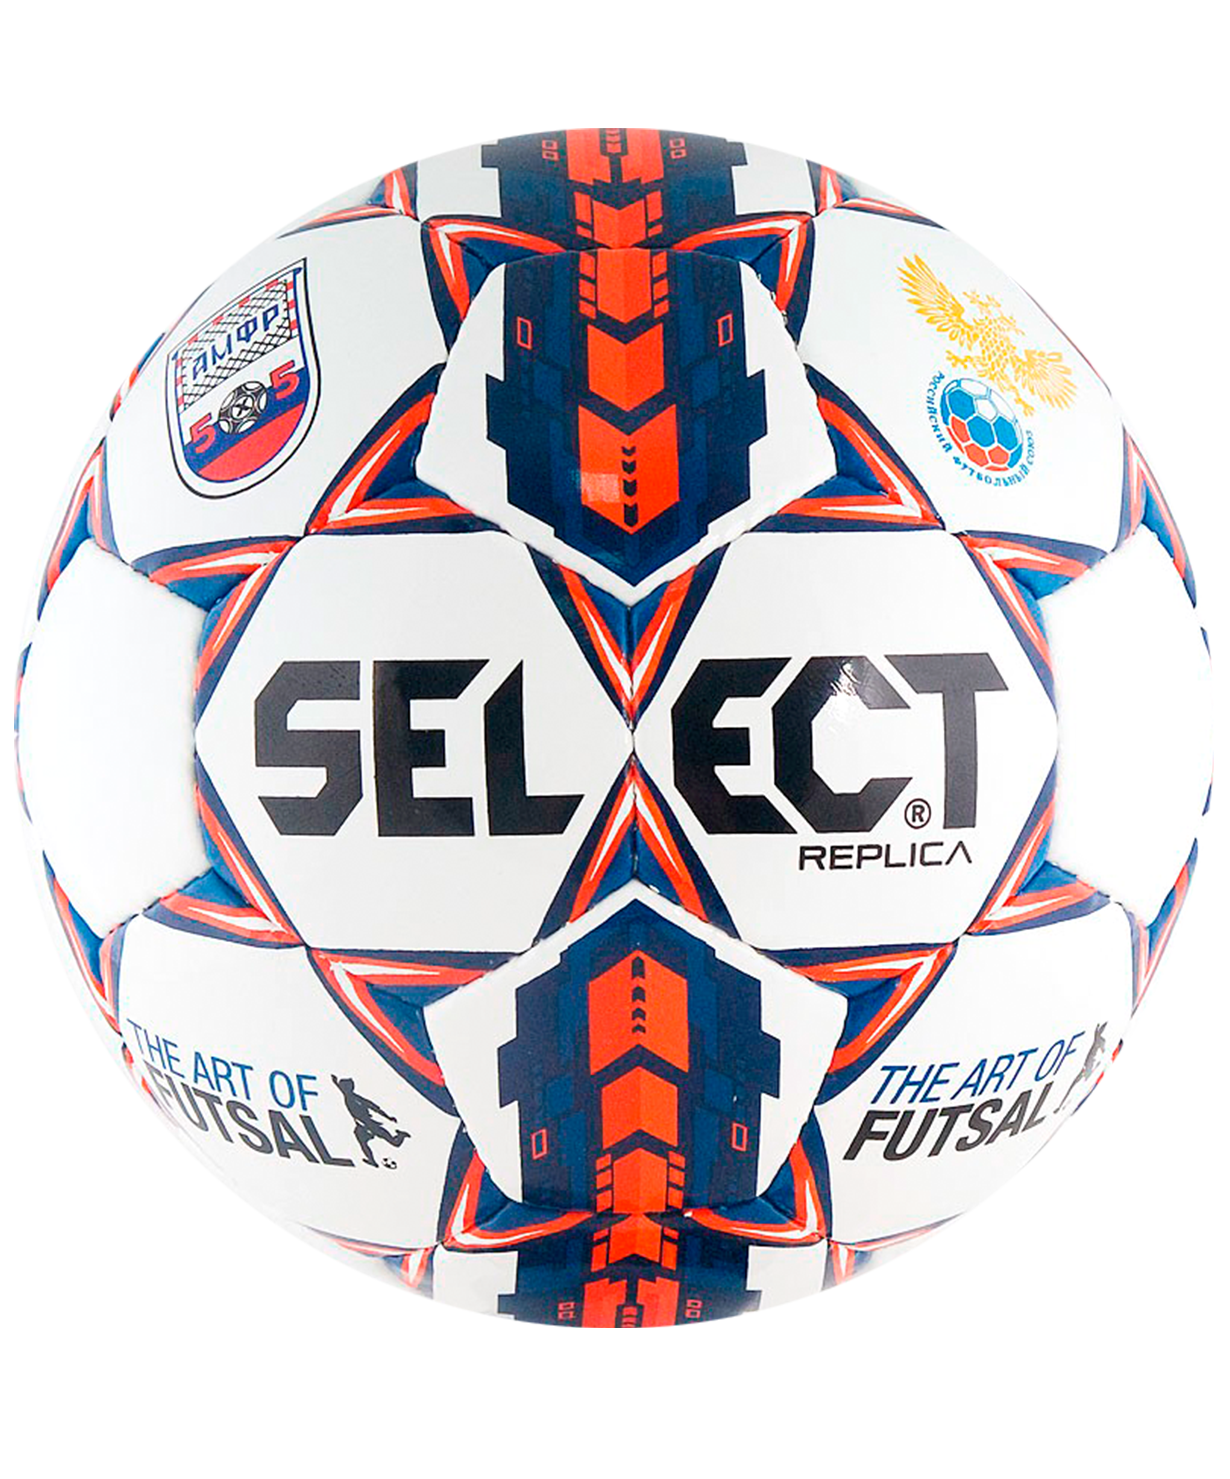 Select Futsal Master. Мини футбольный мяч select. Селект. Select super League. Футбольный мяч select